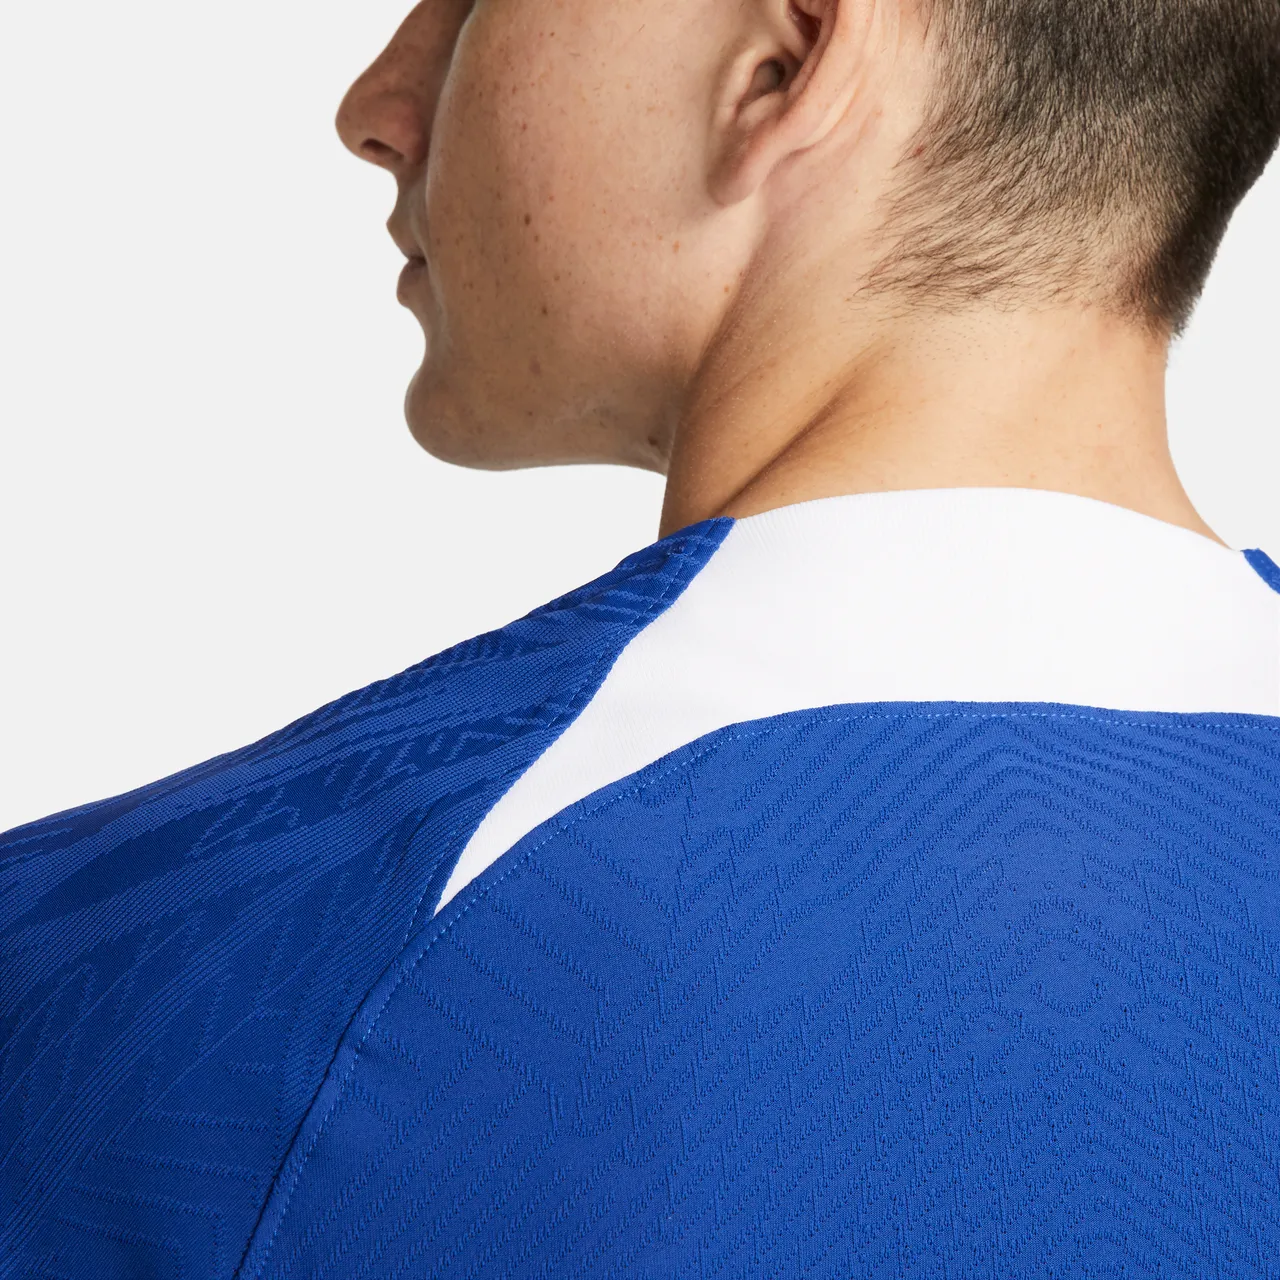 Chelsea F.C. 2023/24 Match Home Men's Nike Dri-FIT ADV Football Shirt - Blue - Polyester